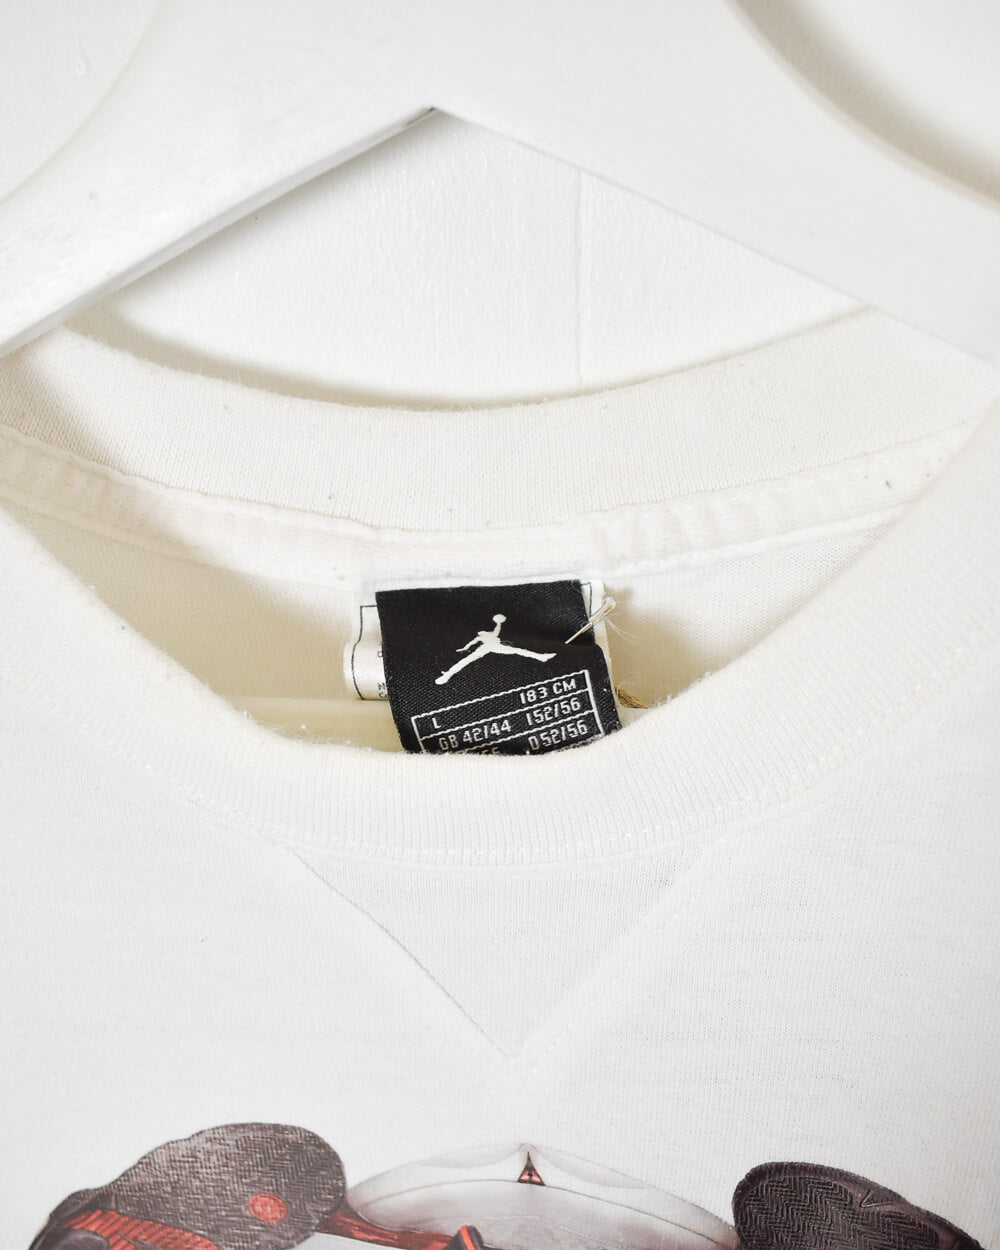 White Nike Jordan T-Shirt - X-Large